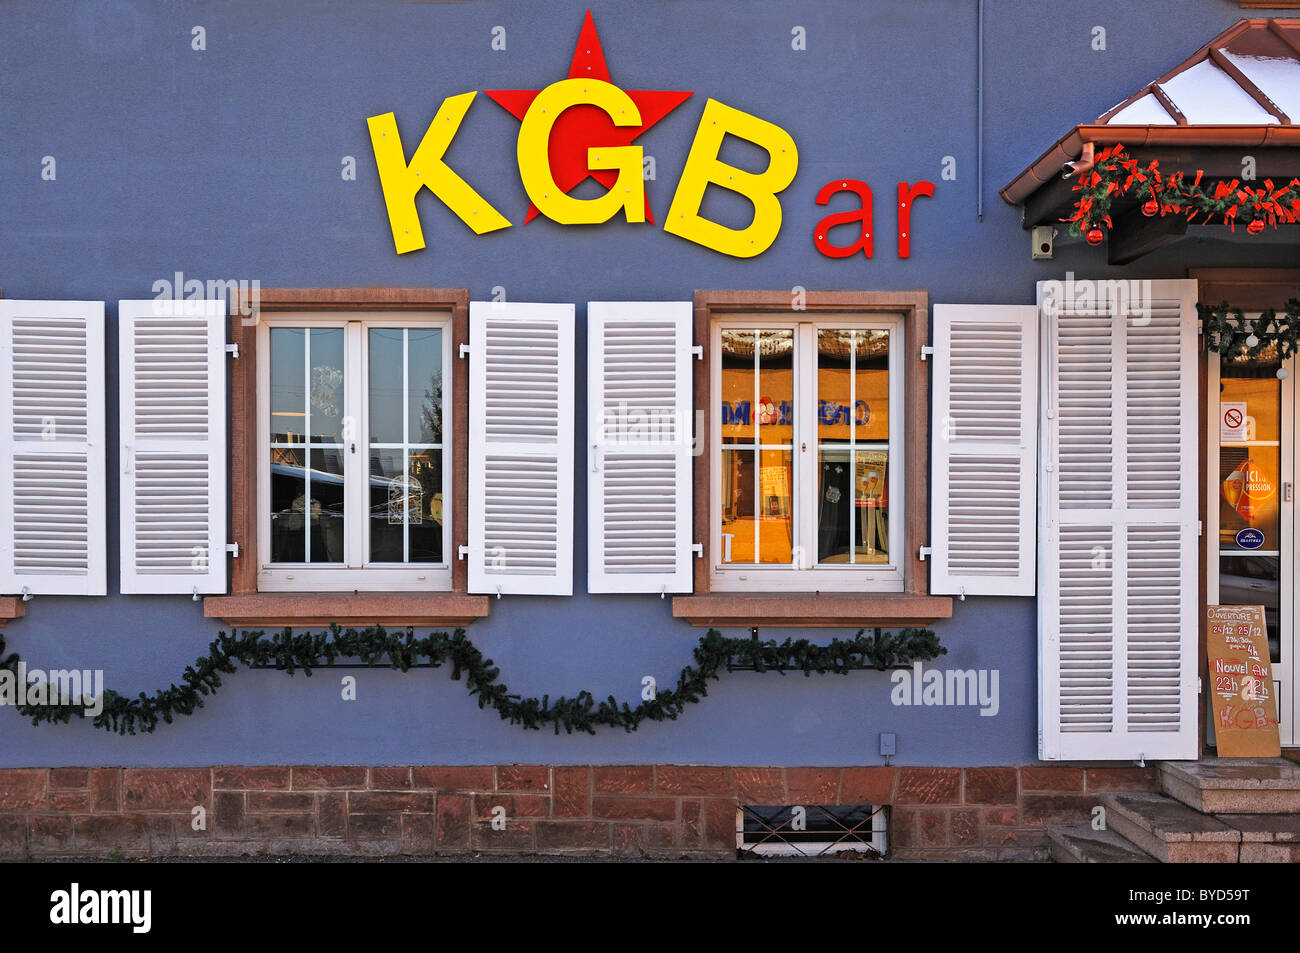 KGBar bar in a French village, Rue du 25 Janvier, Illhaeusern, Alsace, France, Europe Stock Photo